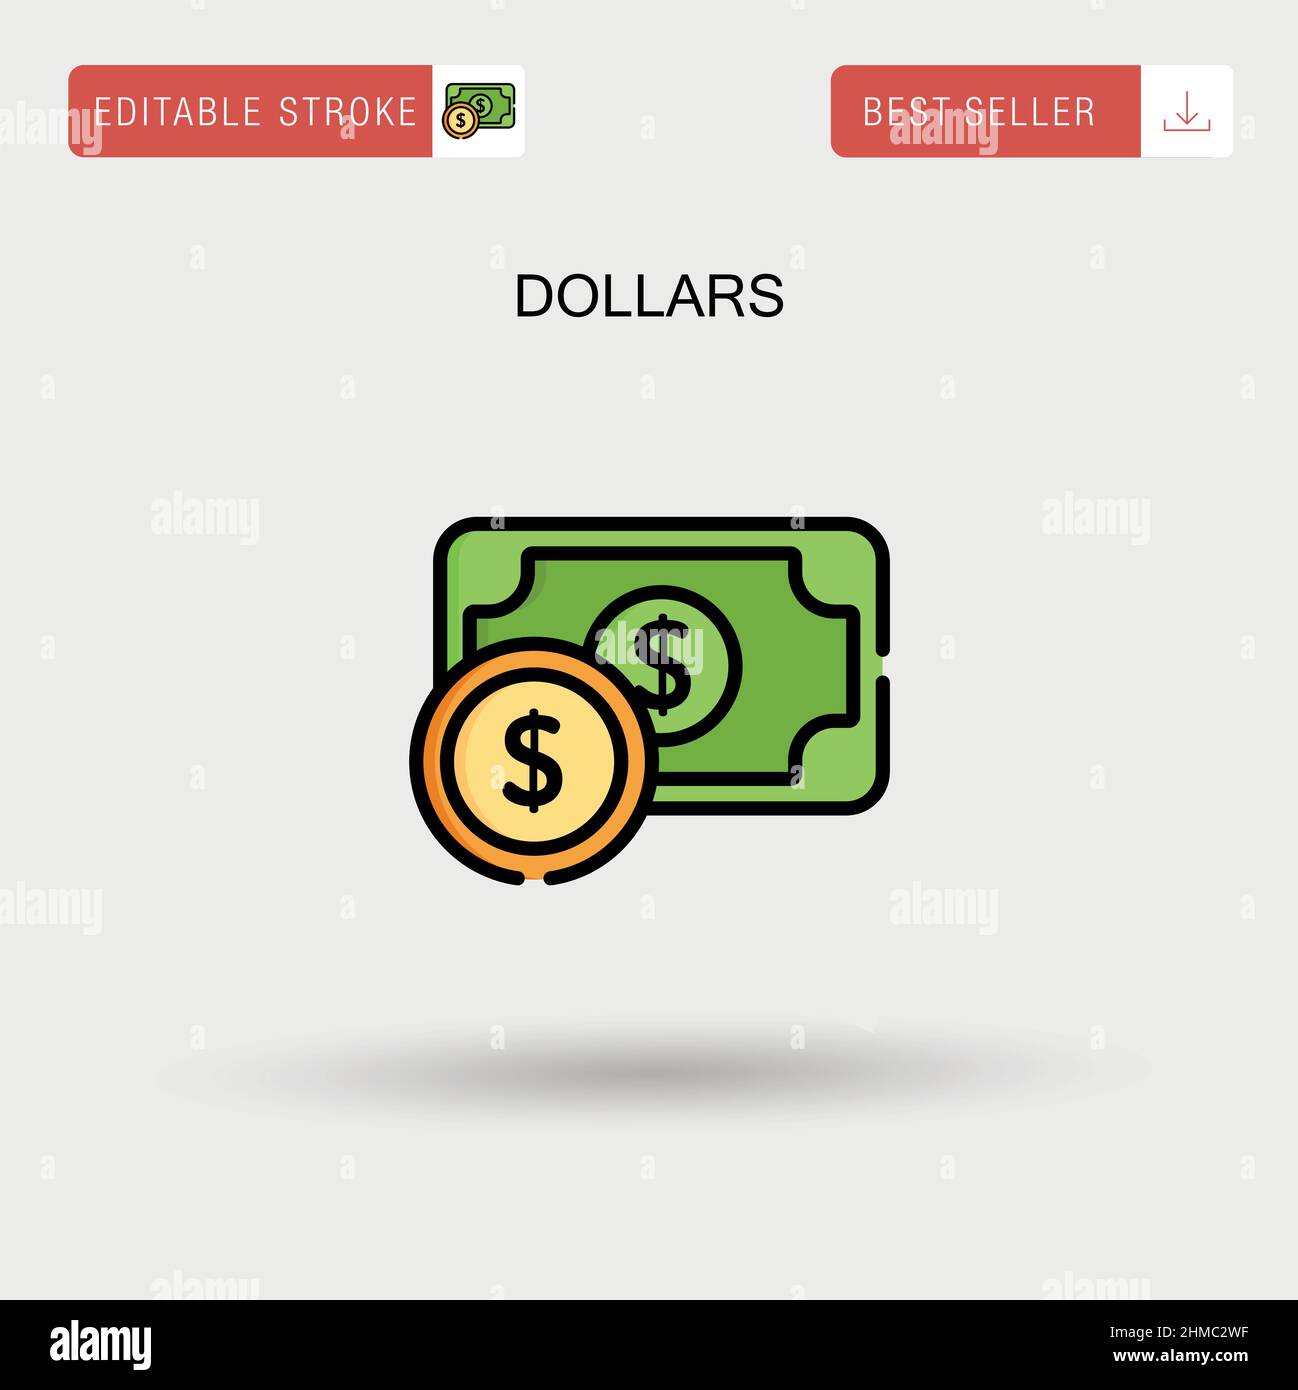 Dollars Simple vector icon. Stock Vector